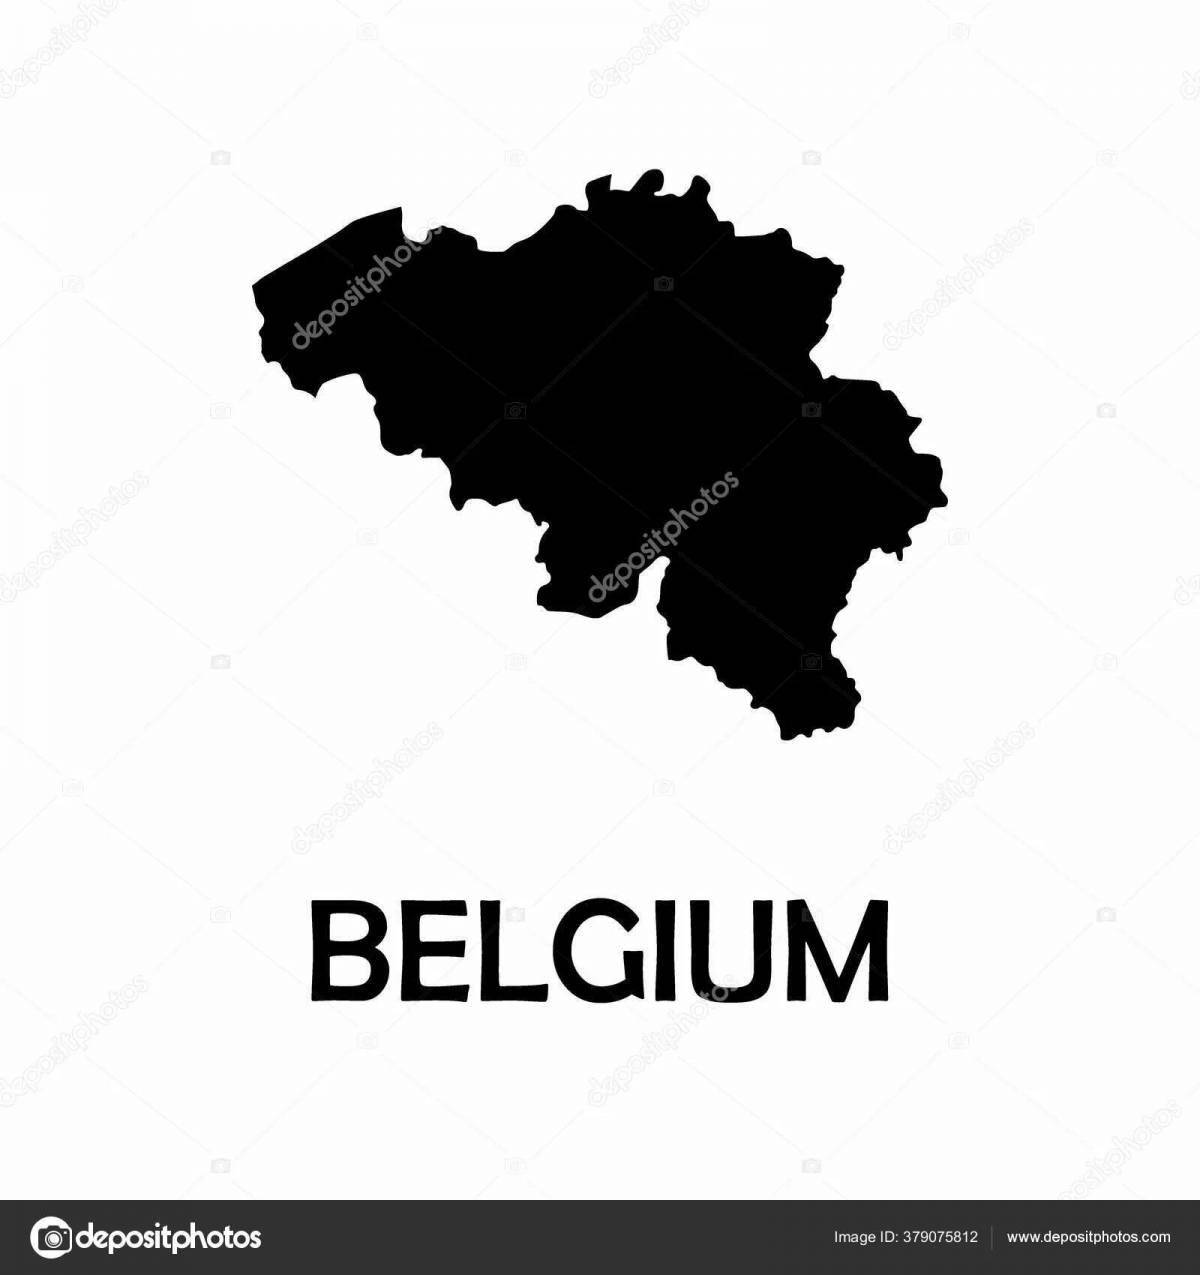 Funny belgian flag coloring book